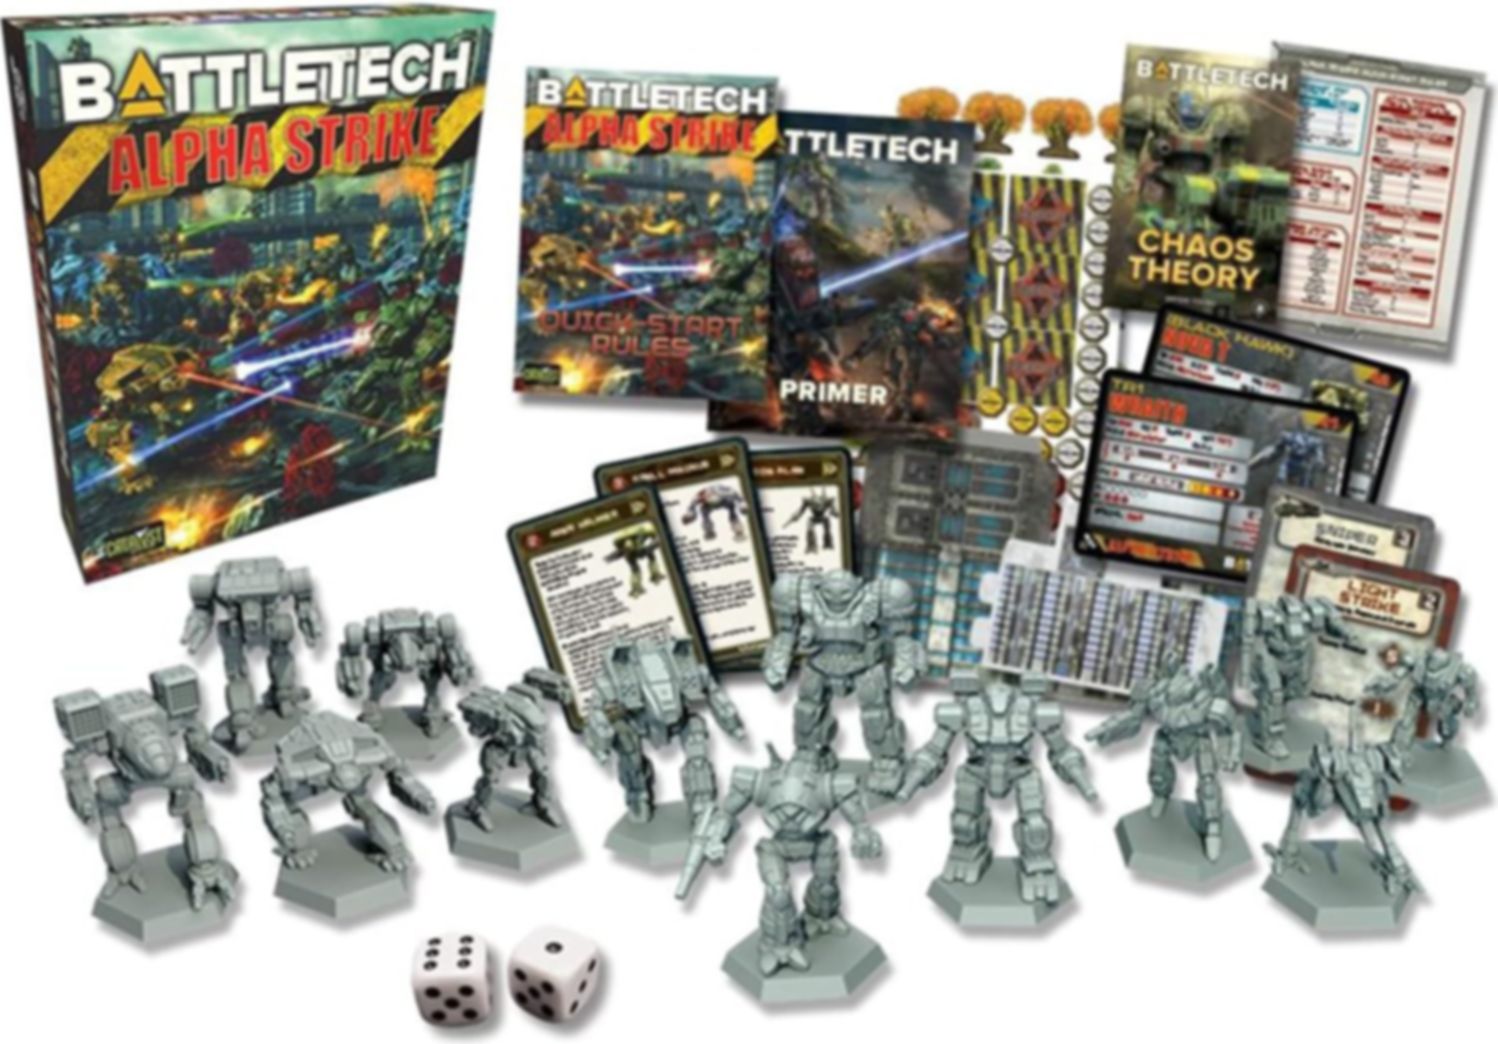 BattleTech: Alpha Strike Boxed Set composants